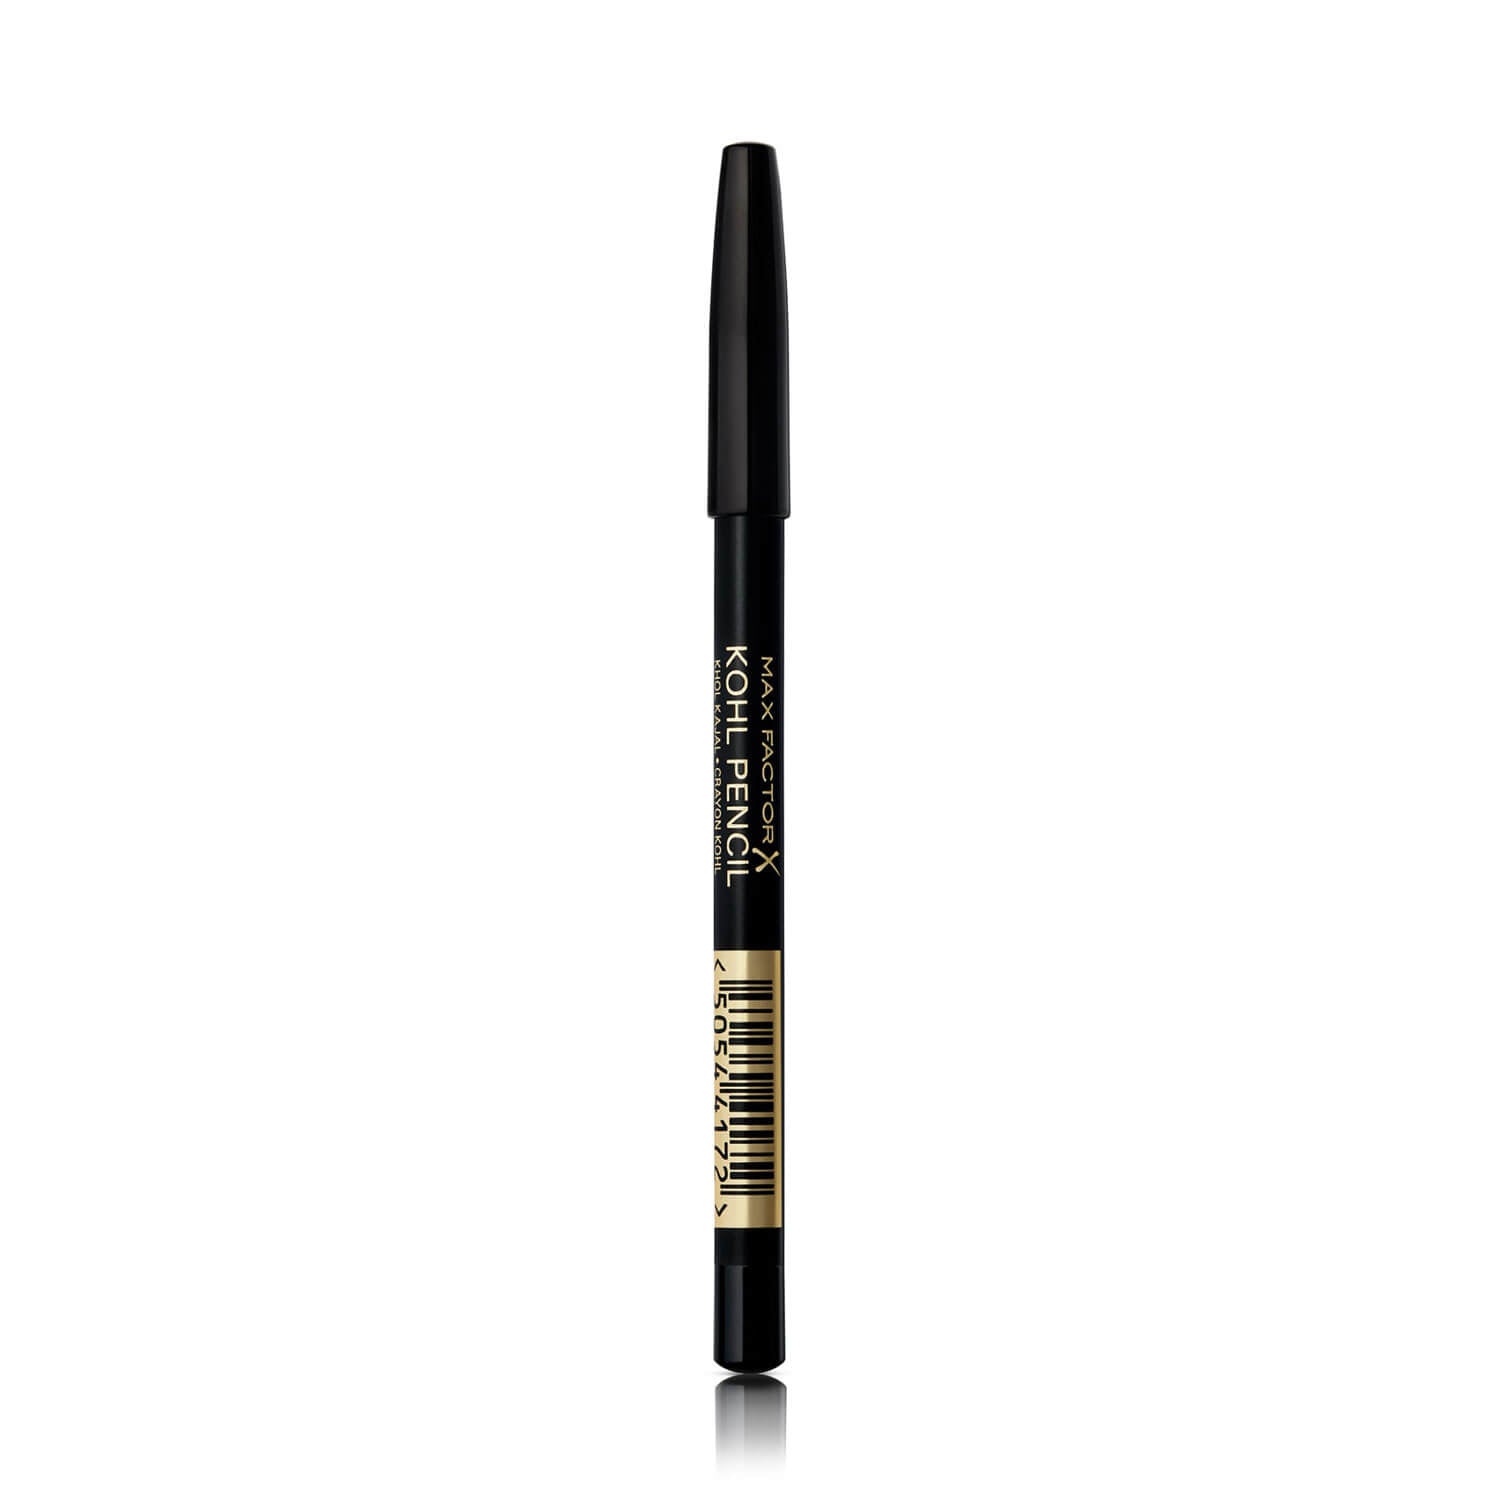 Max Factor Kohl Eyeliner Pencil - Black 1 Shaws Department Stores